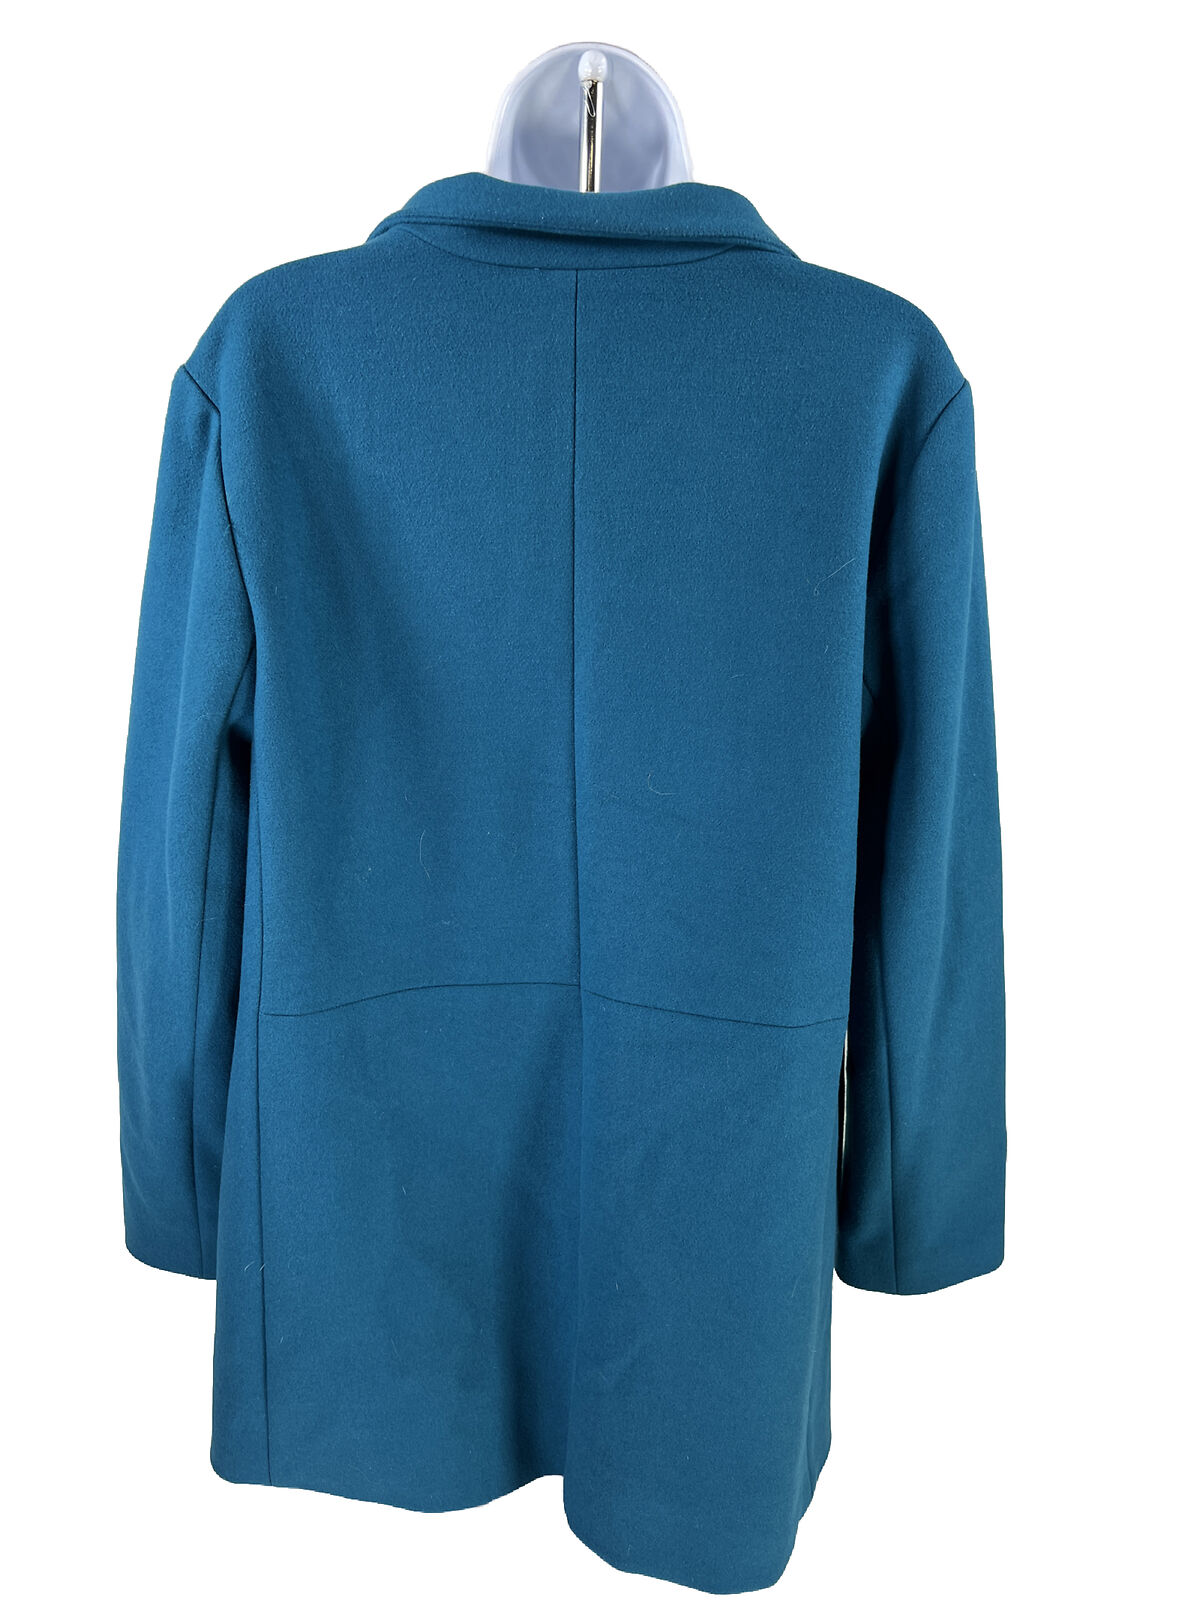 J. Jill Women's Blue Micro-Fleece Button Up Coat - Petite M